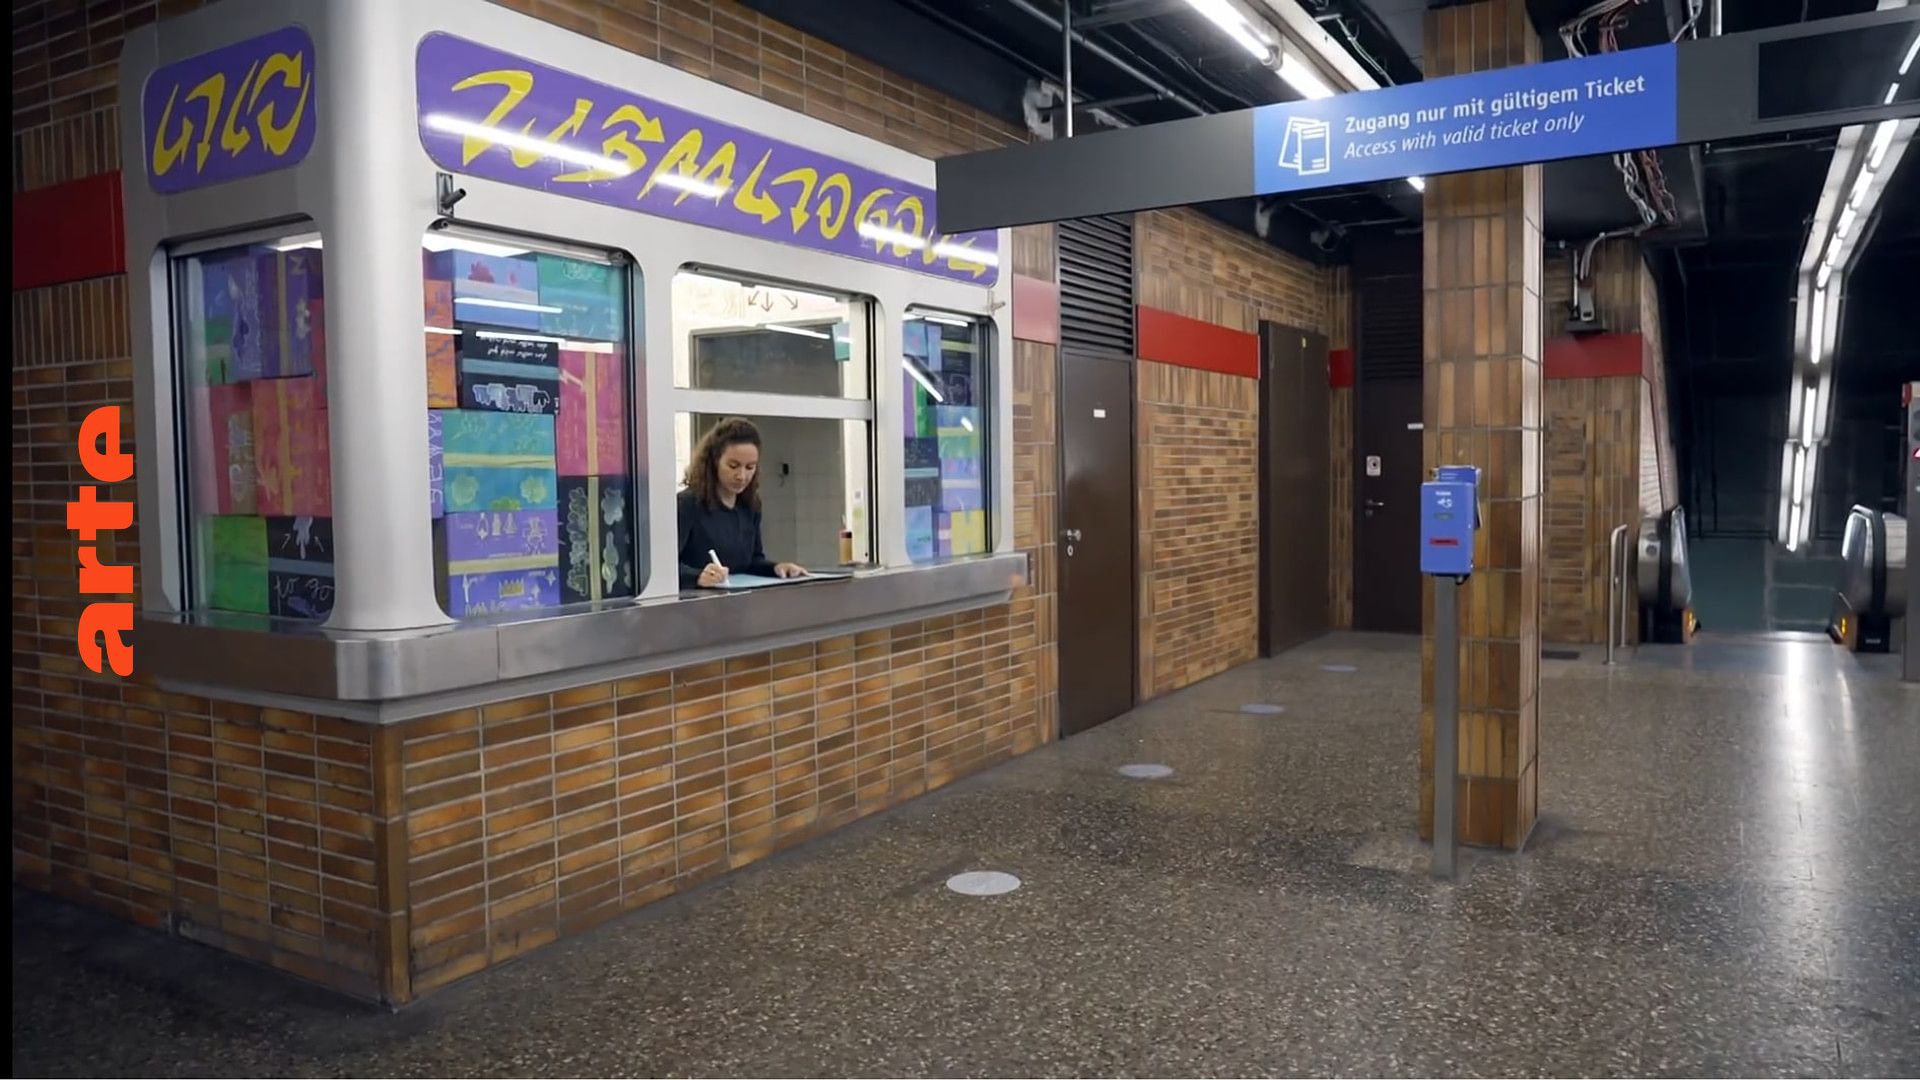 München: U-Bahn Kioske erwachen zu neuem Leben